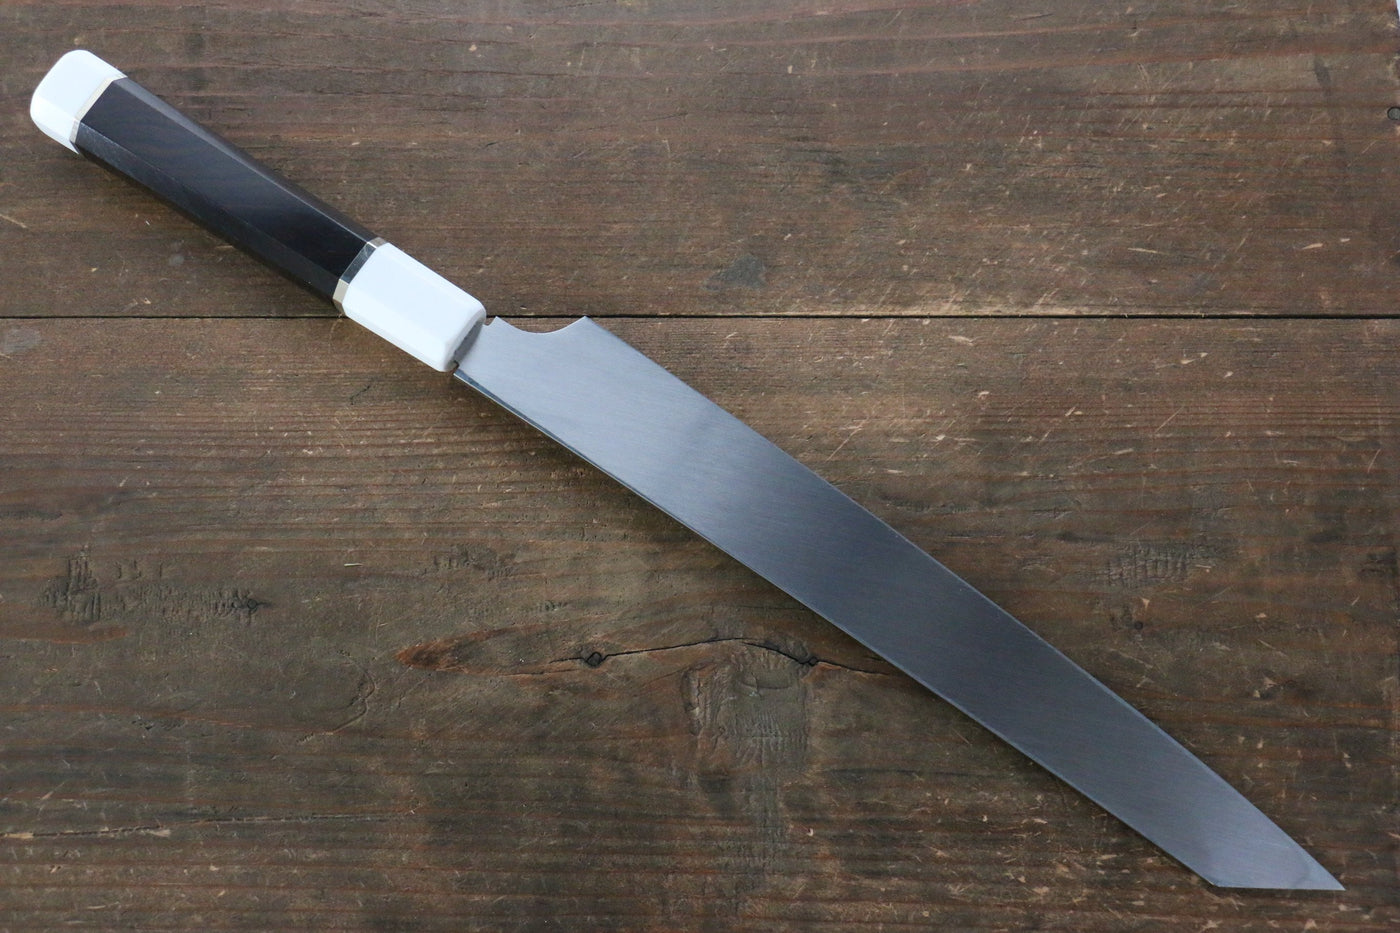 堺 孝行 銀龍 本焼 スウェーデン鋼 鏡面仕上げ 剣型柳刃包丁 和包丁